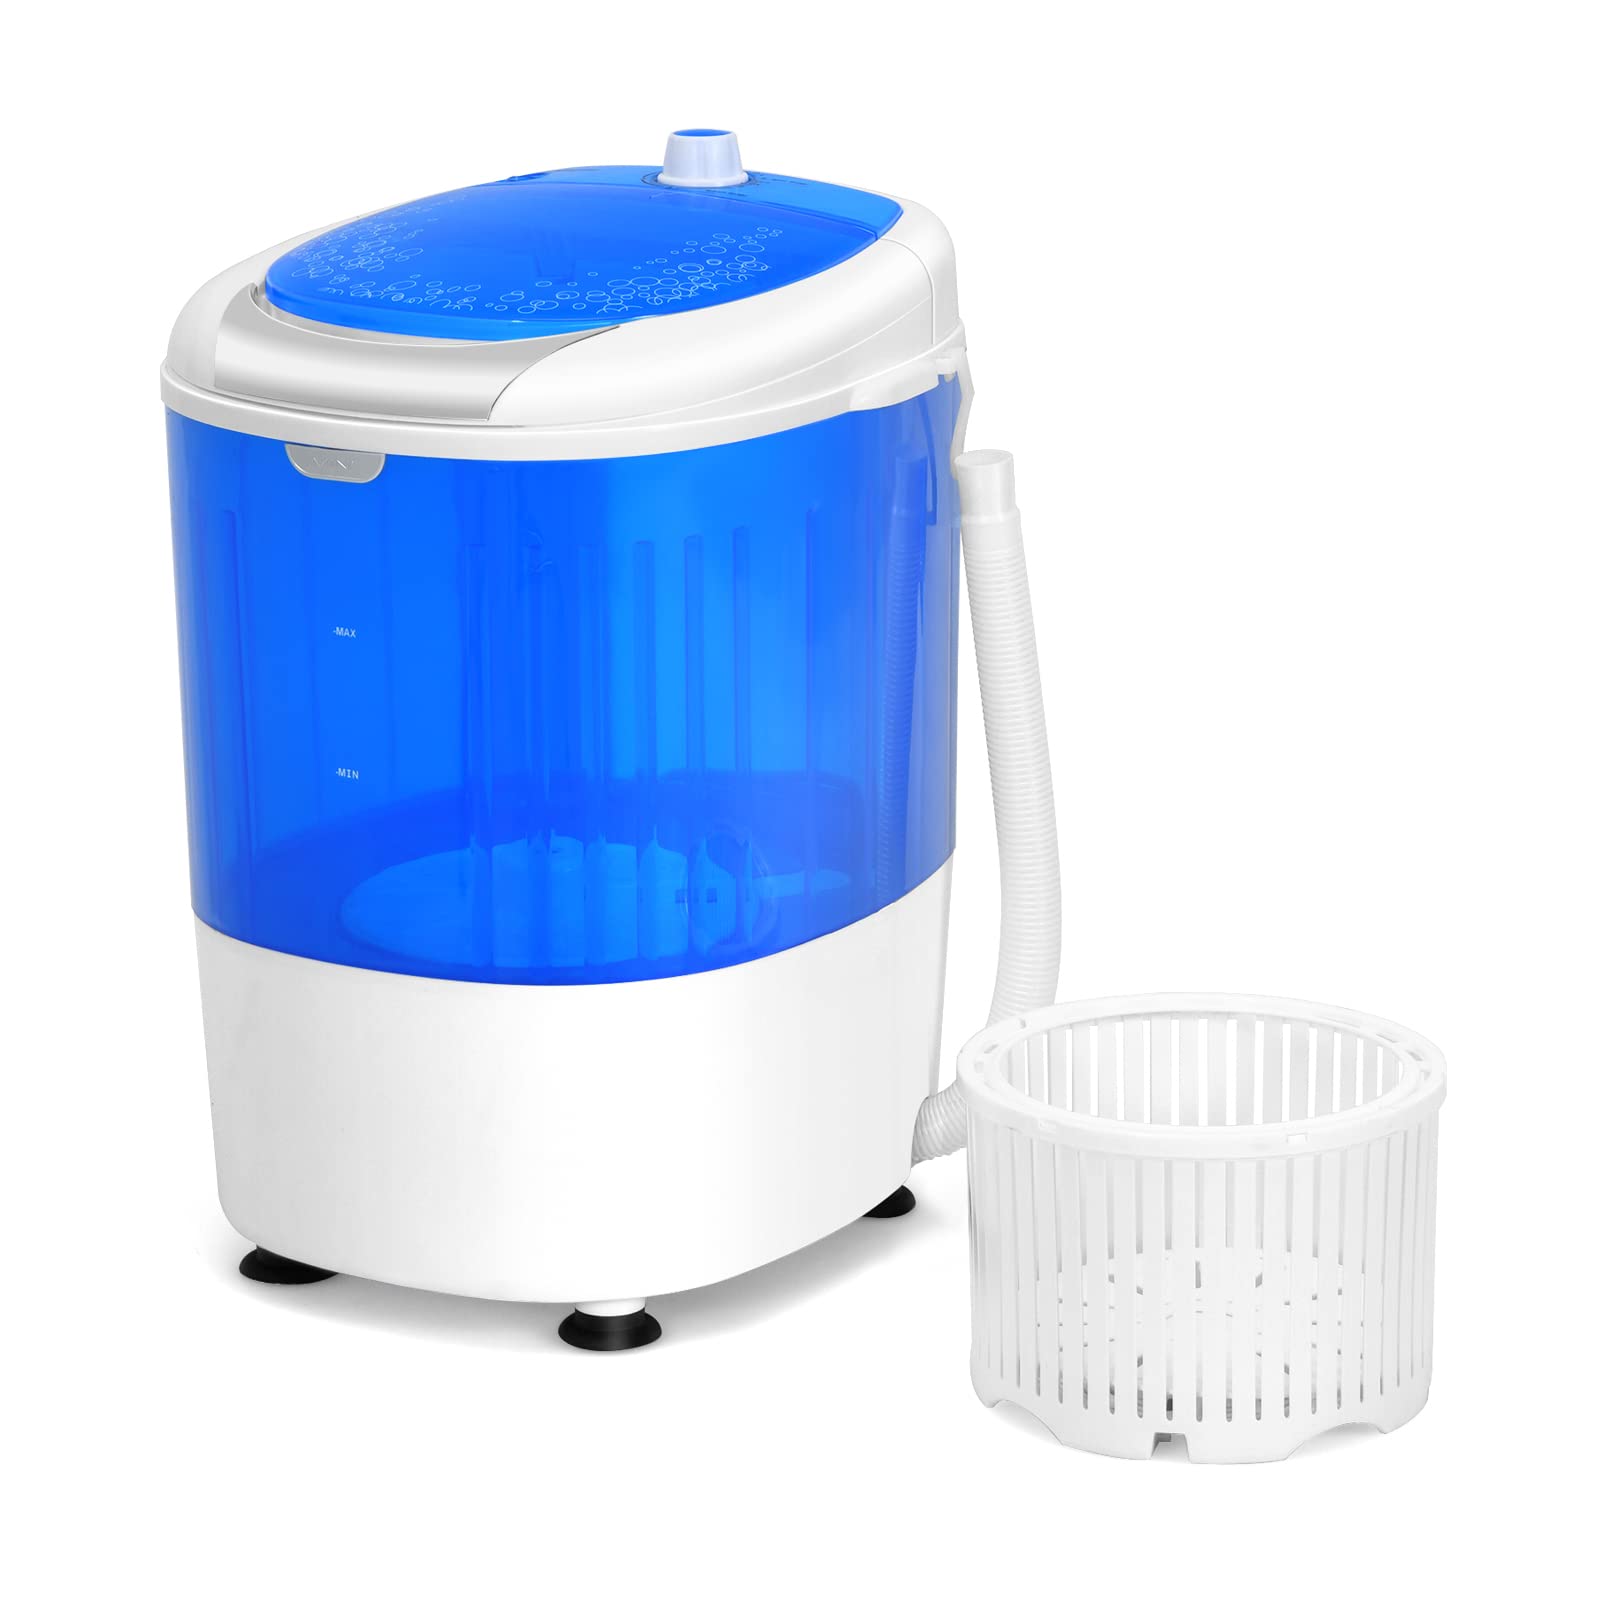 Giantex Portable Washing Machine, Mini Washer and Dryer Combo